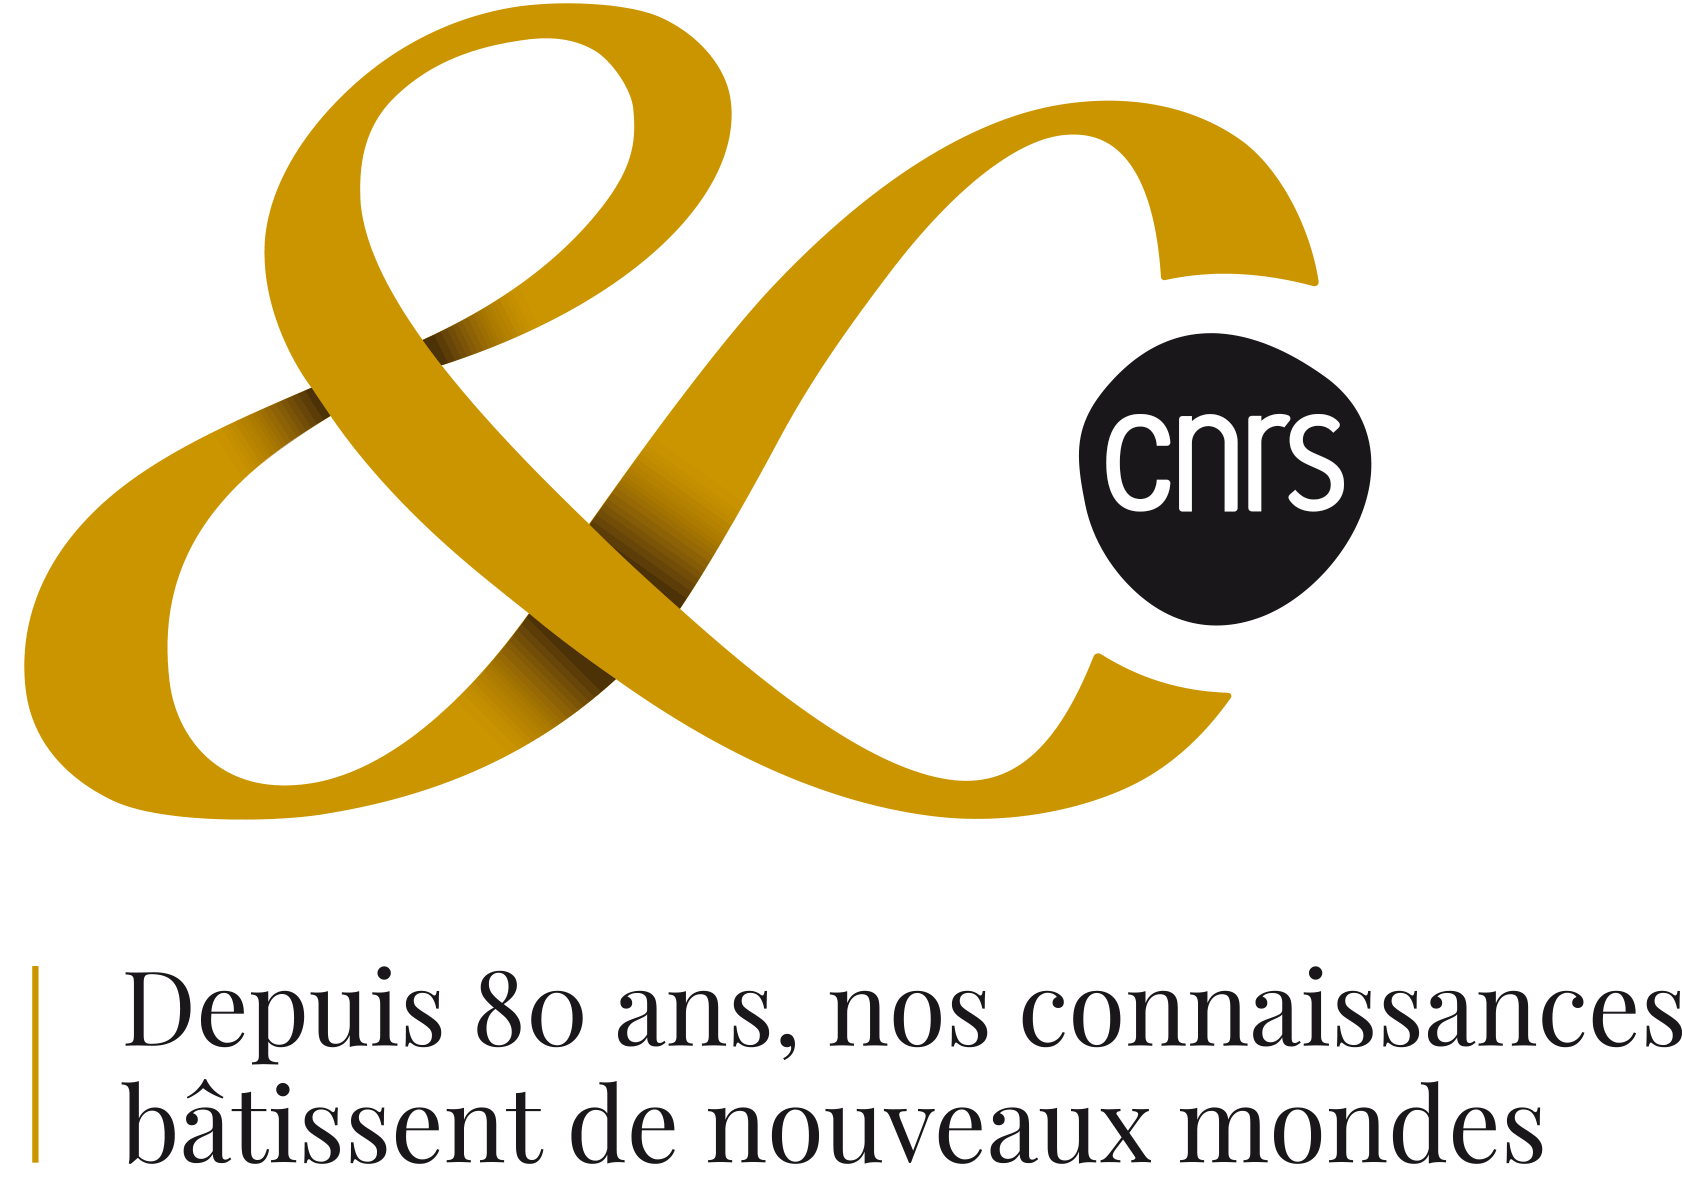 CNRS-INEE